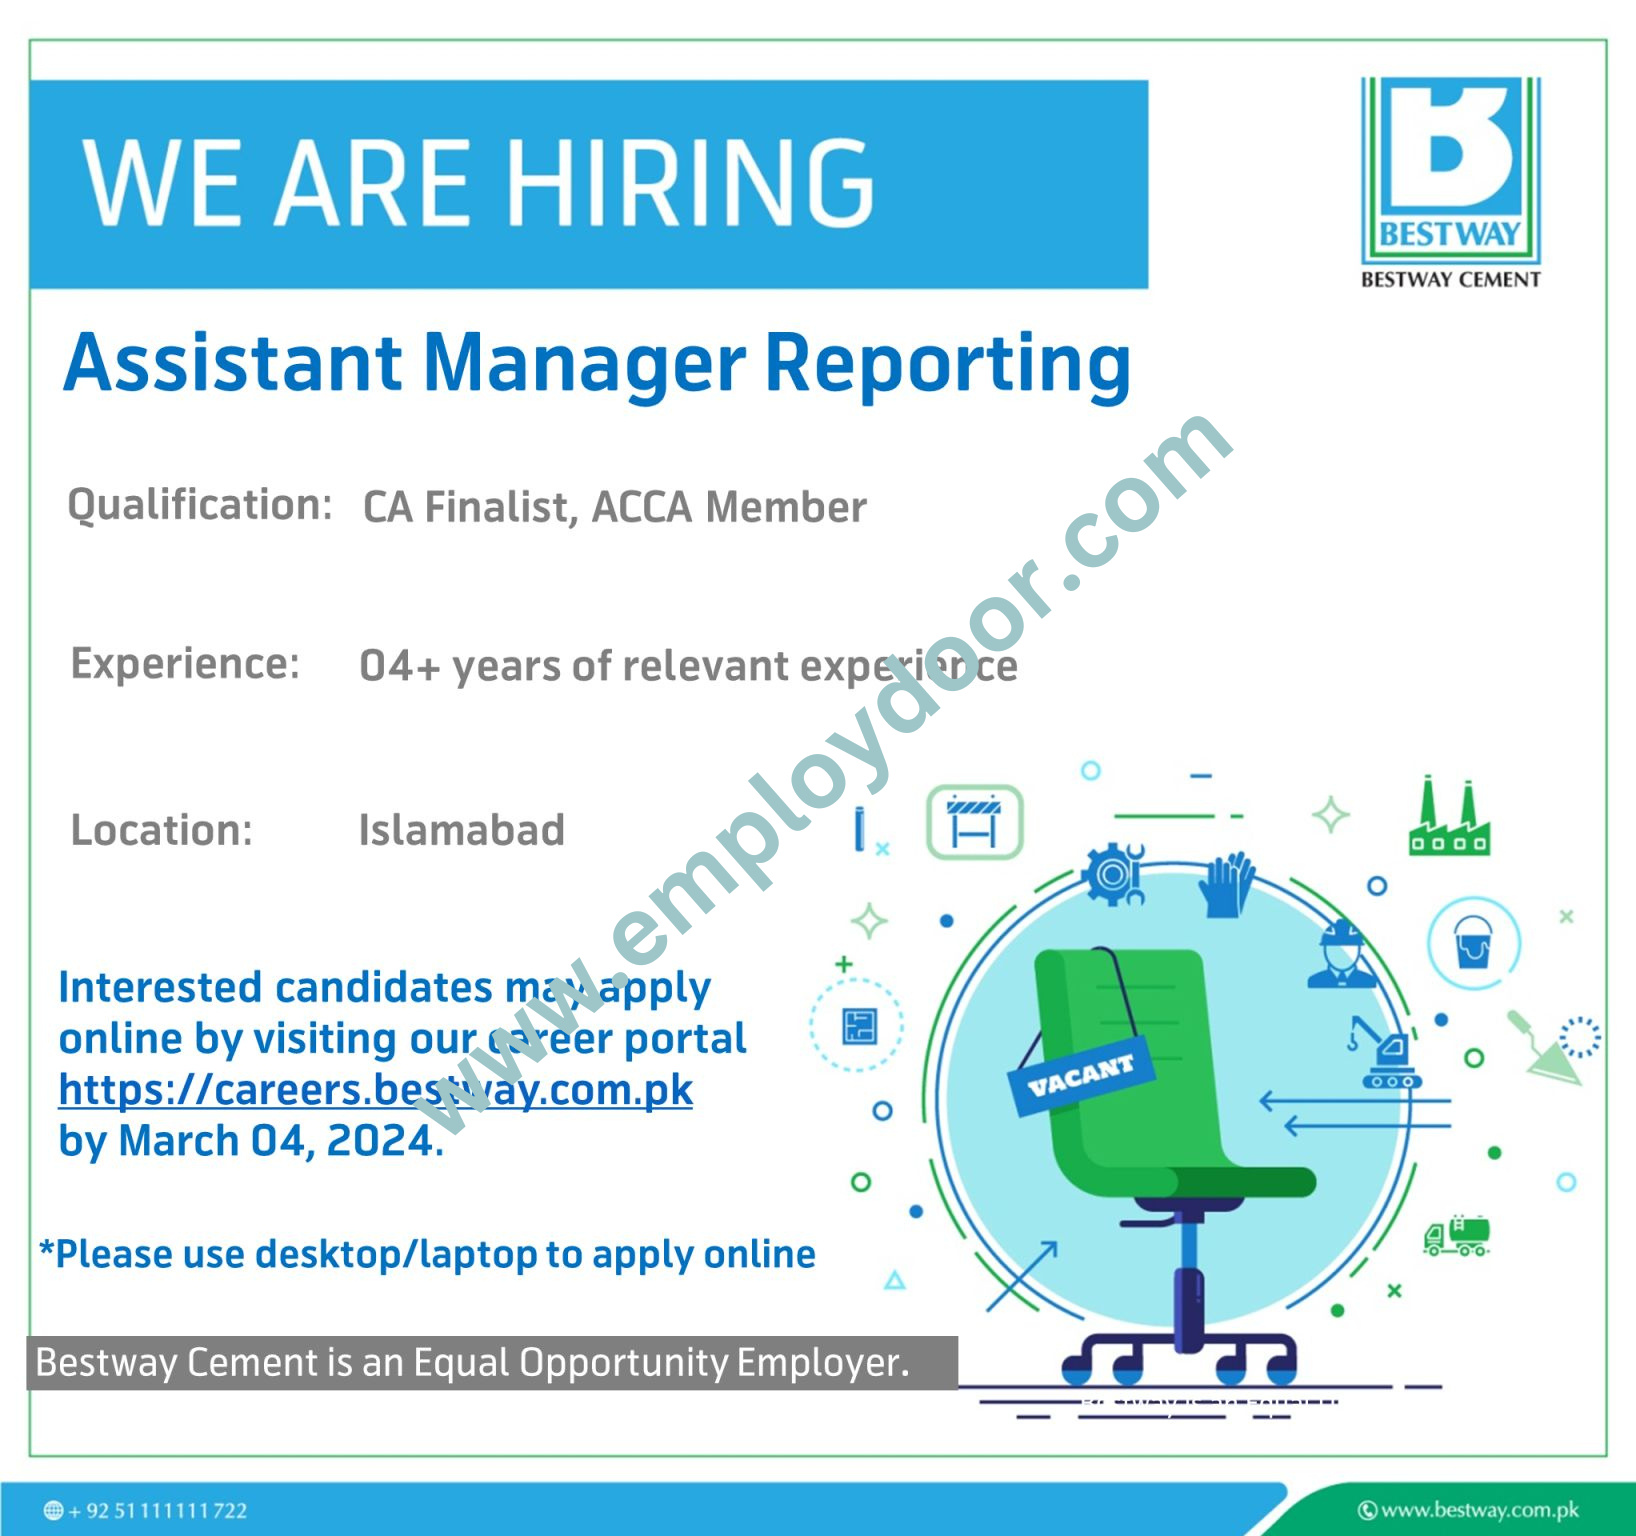 Bestway Cement Job Opportunity Assistant Manager Reporting | Employ Door